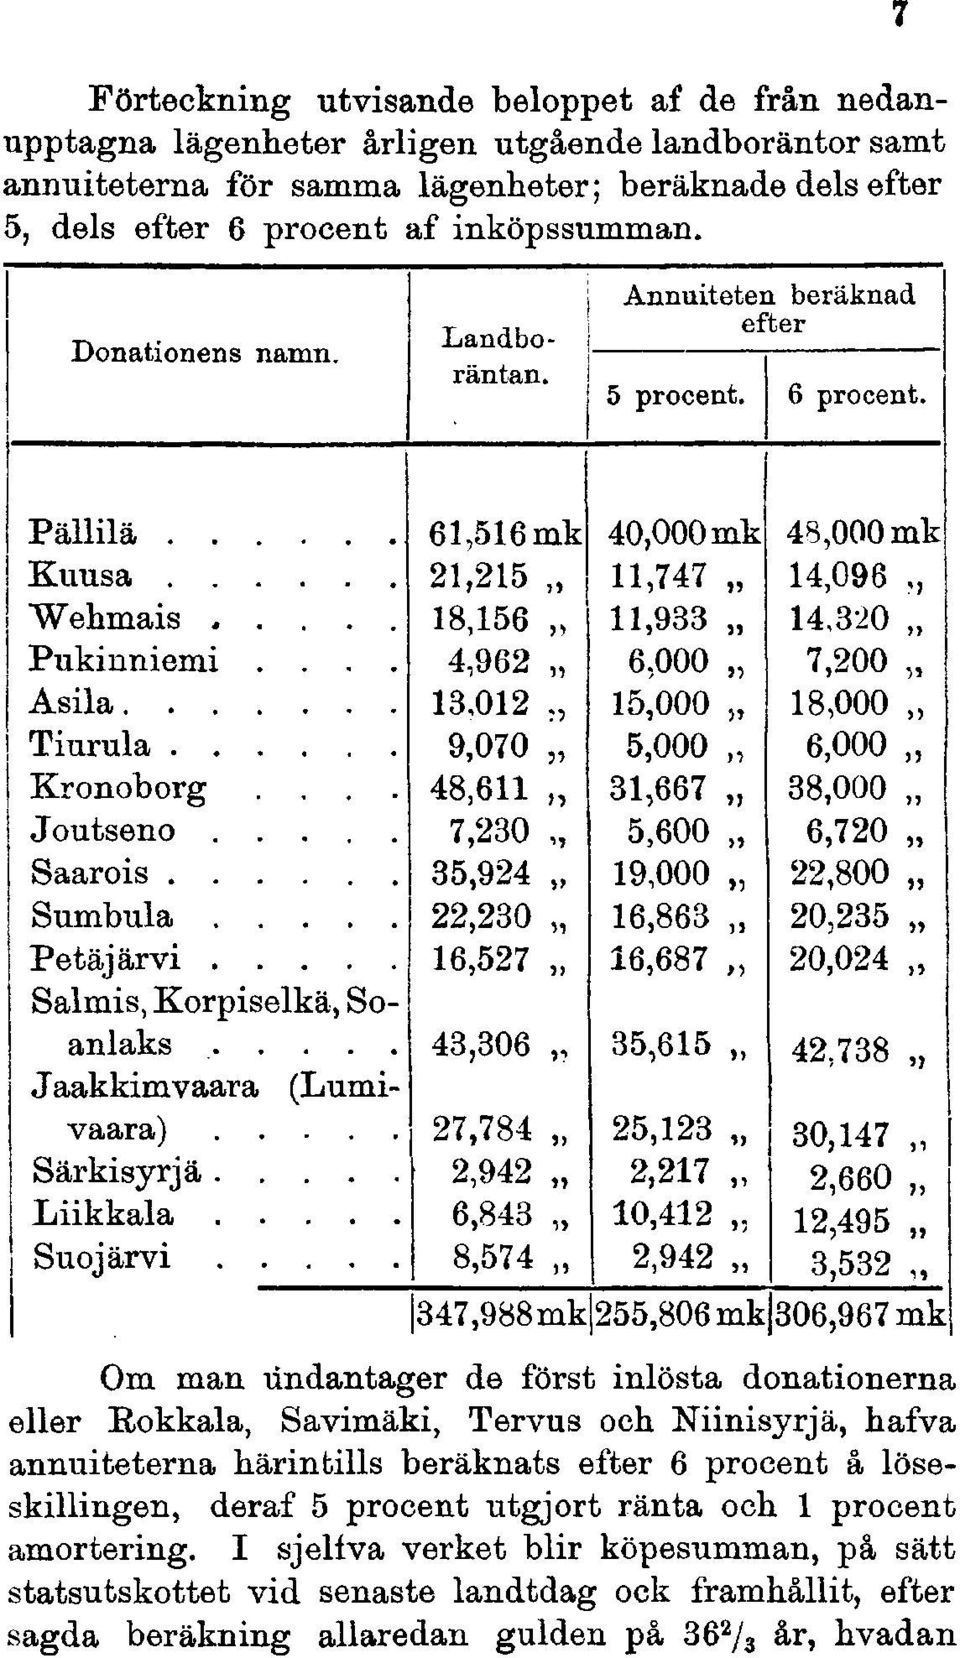 ... 4,962 6,000 7,200 Asila 13,012 15,000 18,000 Tiurula 9,070 5,000 6,000 Kronoborg.